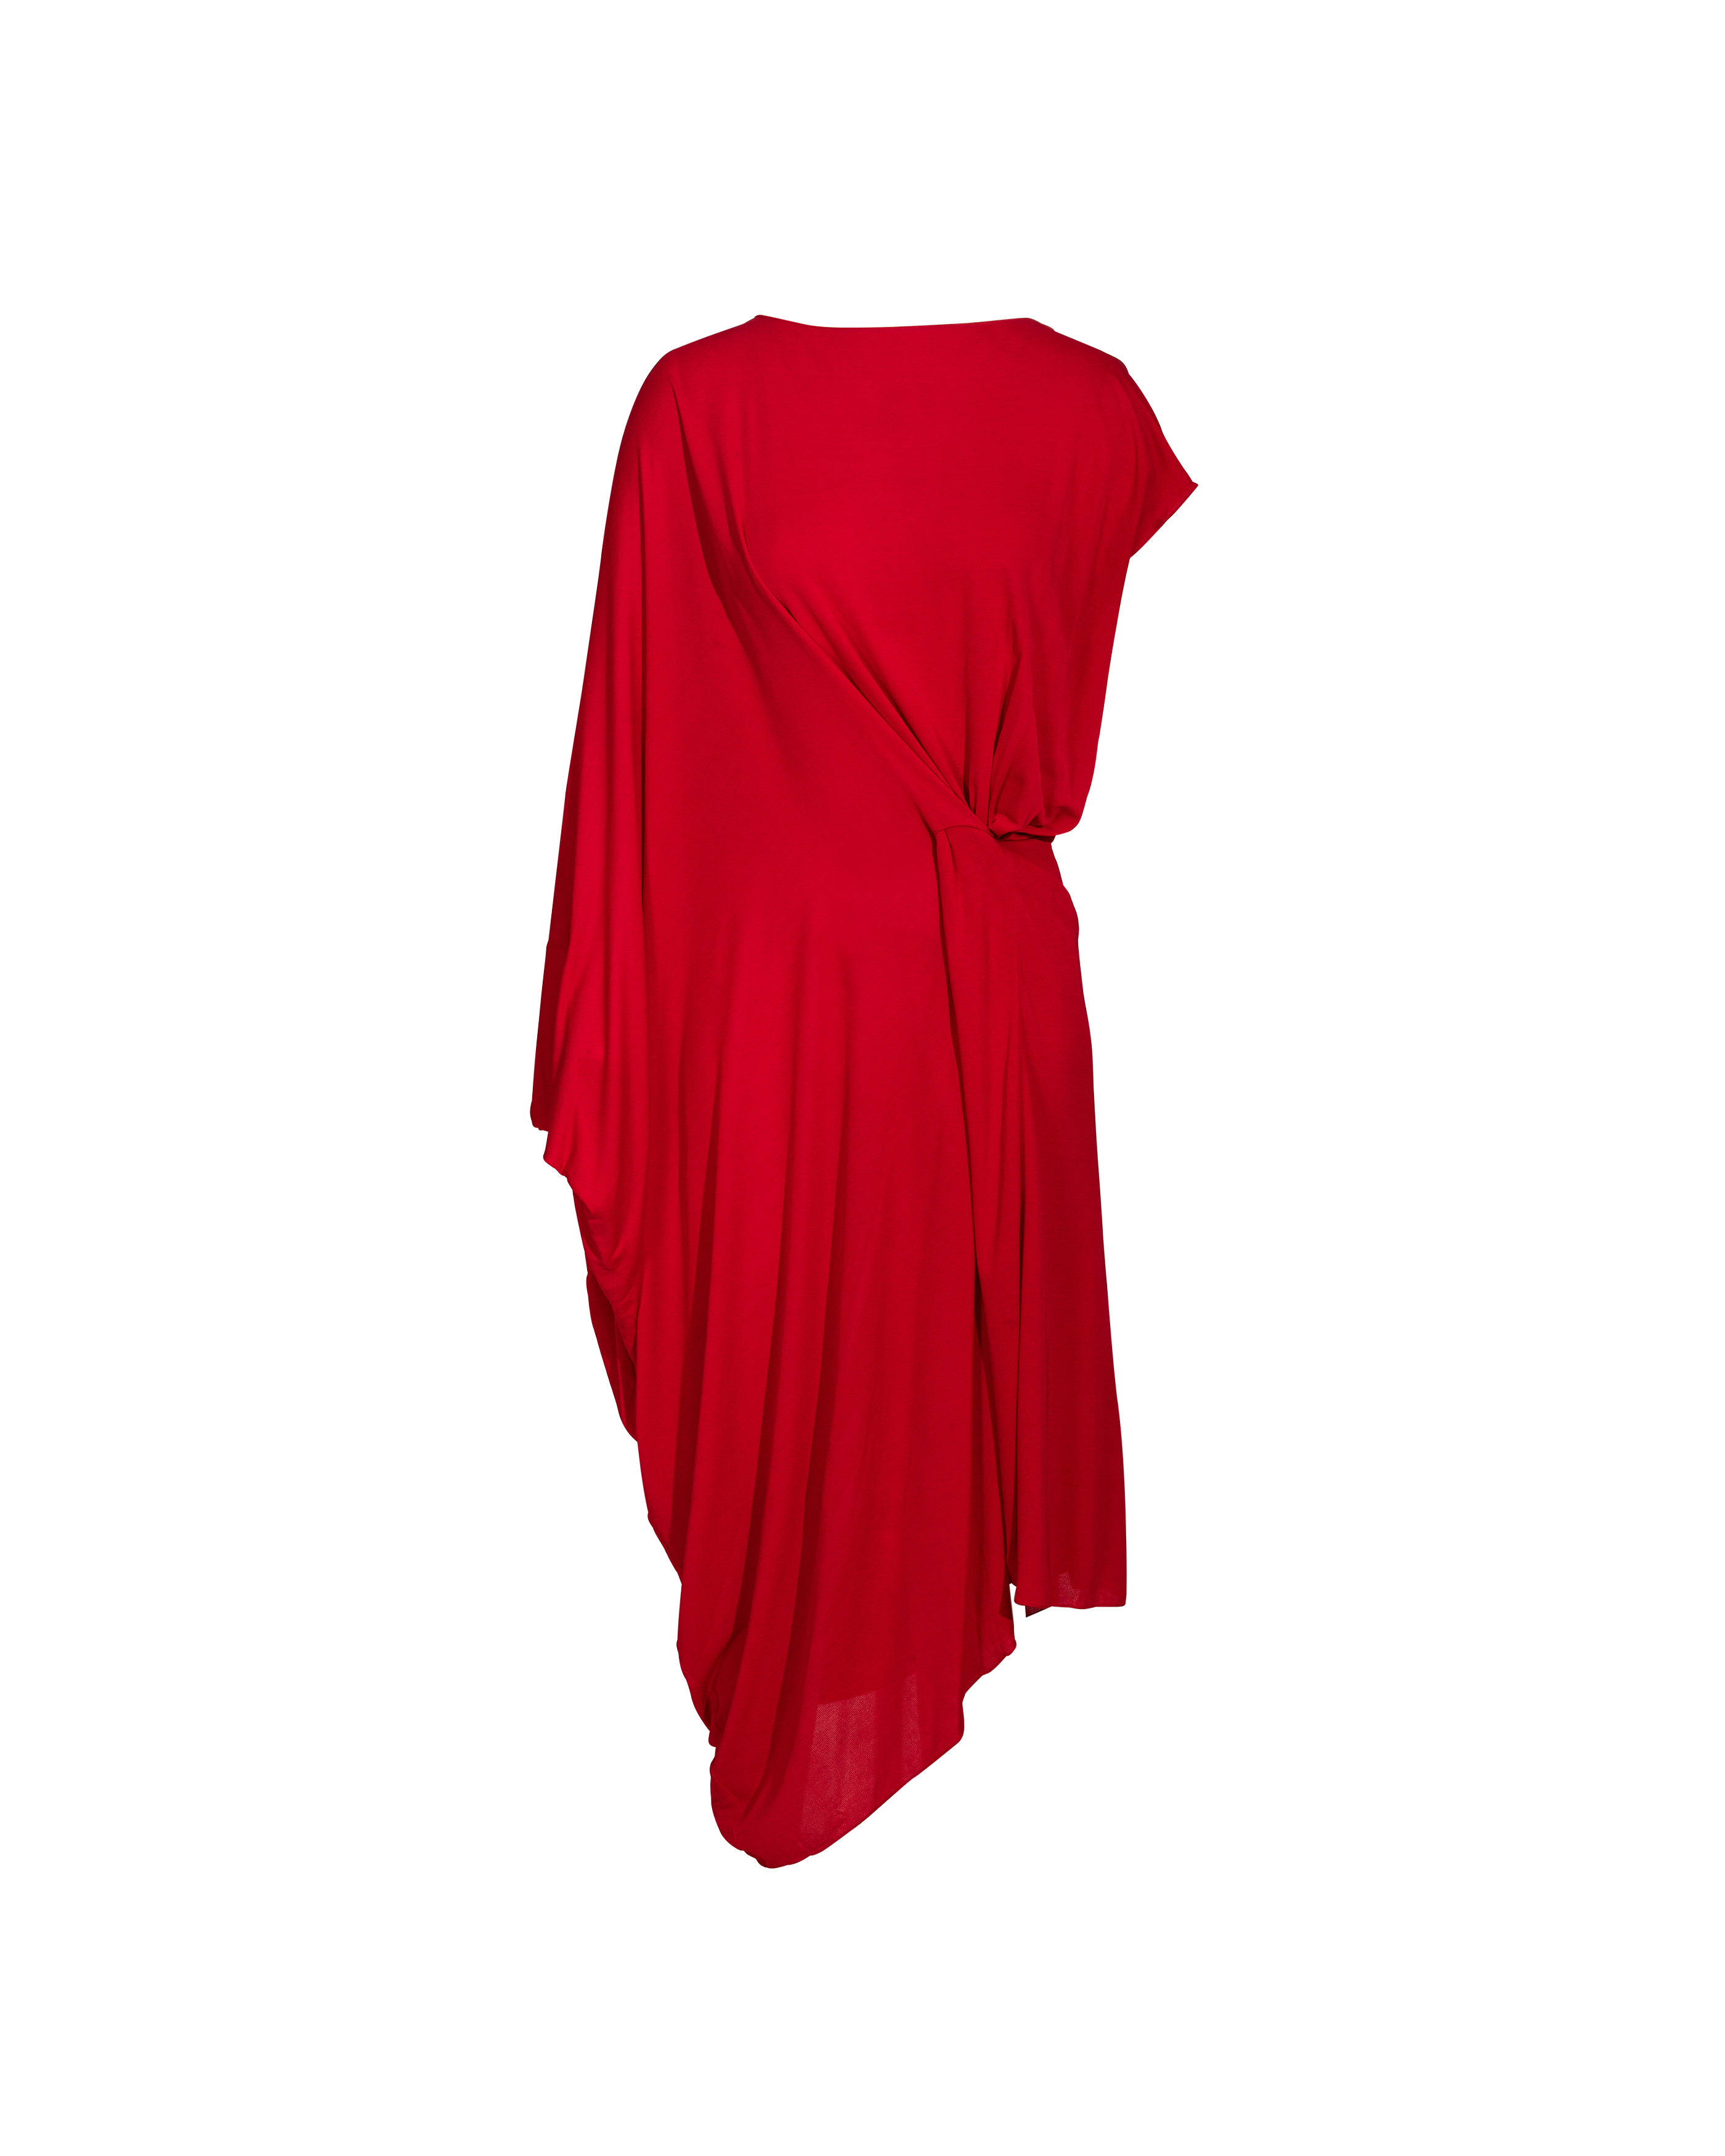 S/S 2009 Red Jersey Asymmetrical Drape Dress